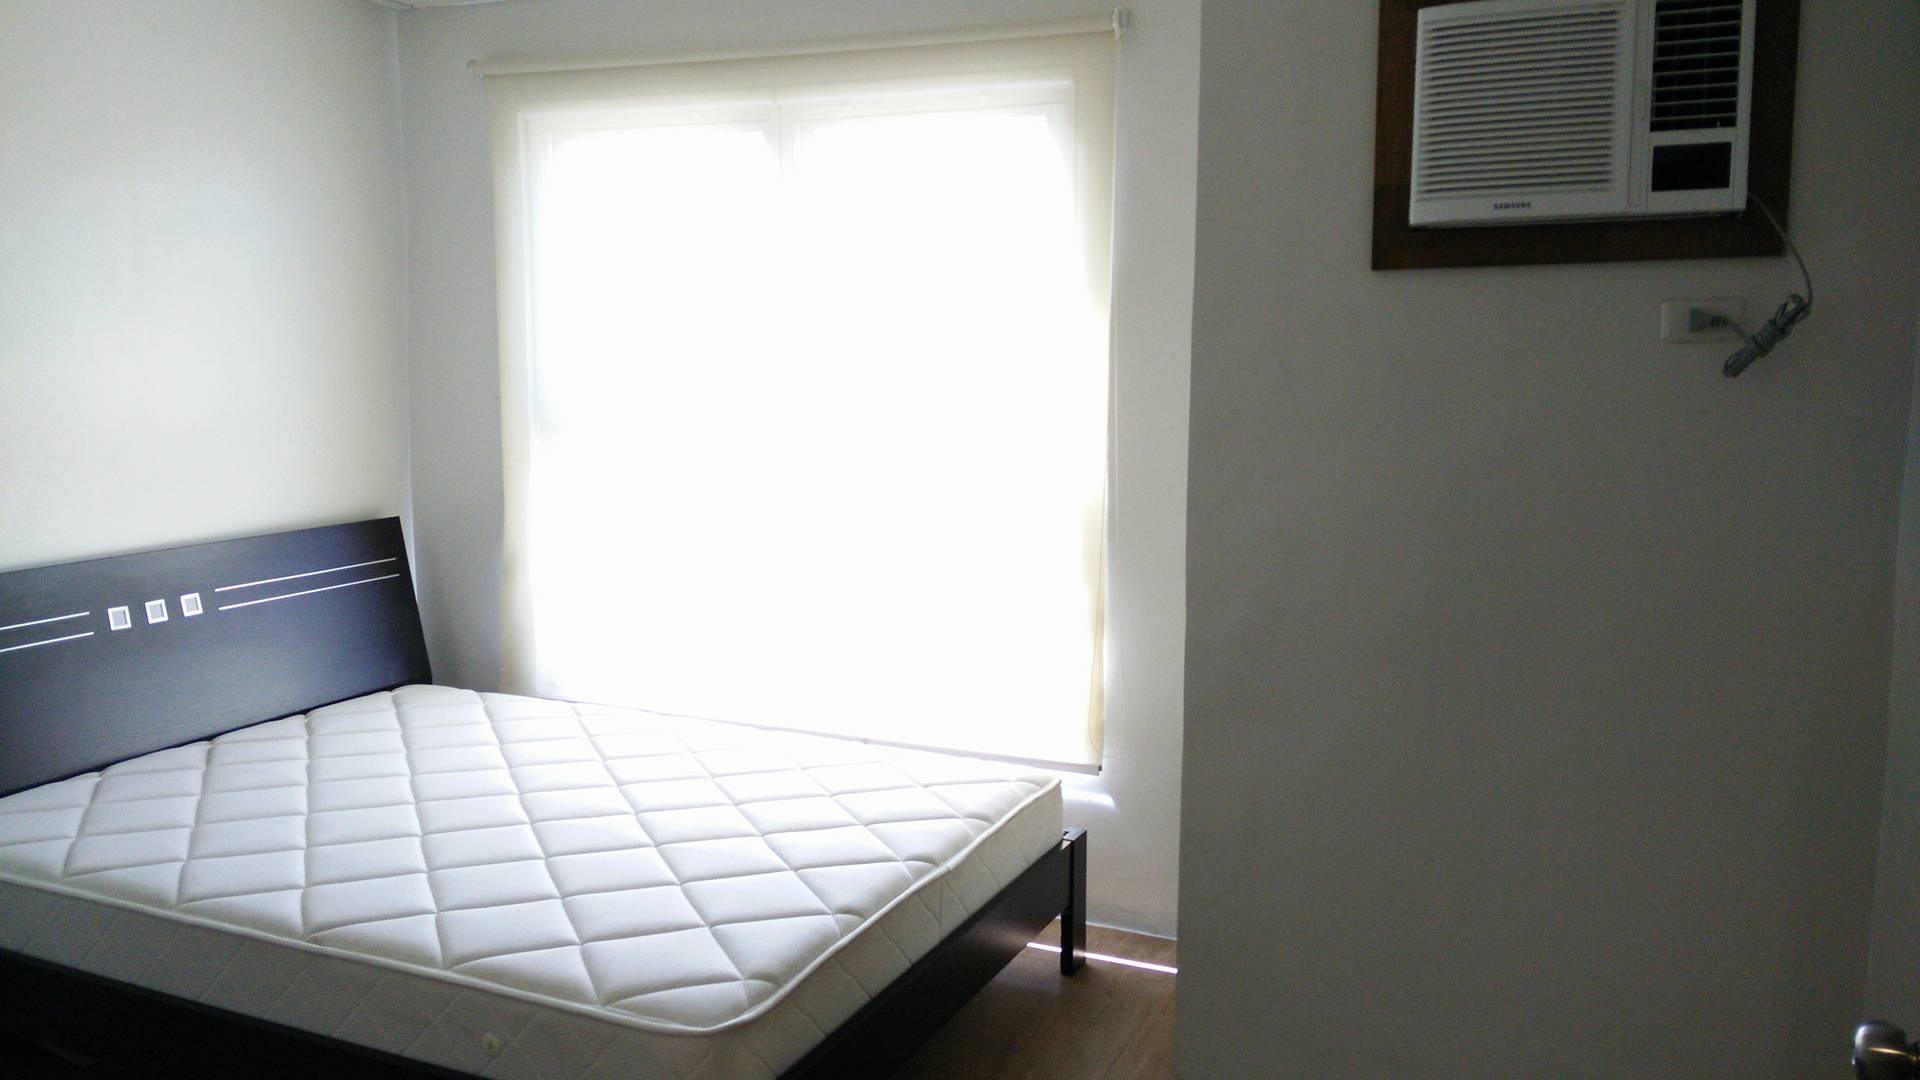 2-bedroom-furnished-apartment-near-ayala-mall-cebu-city